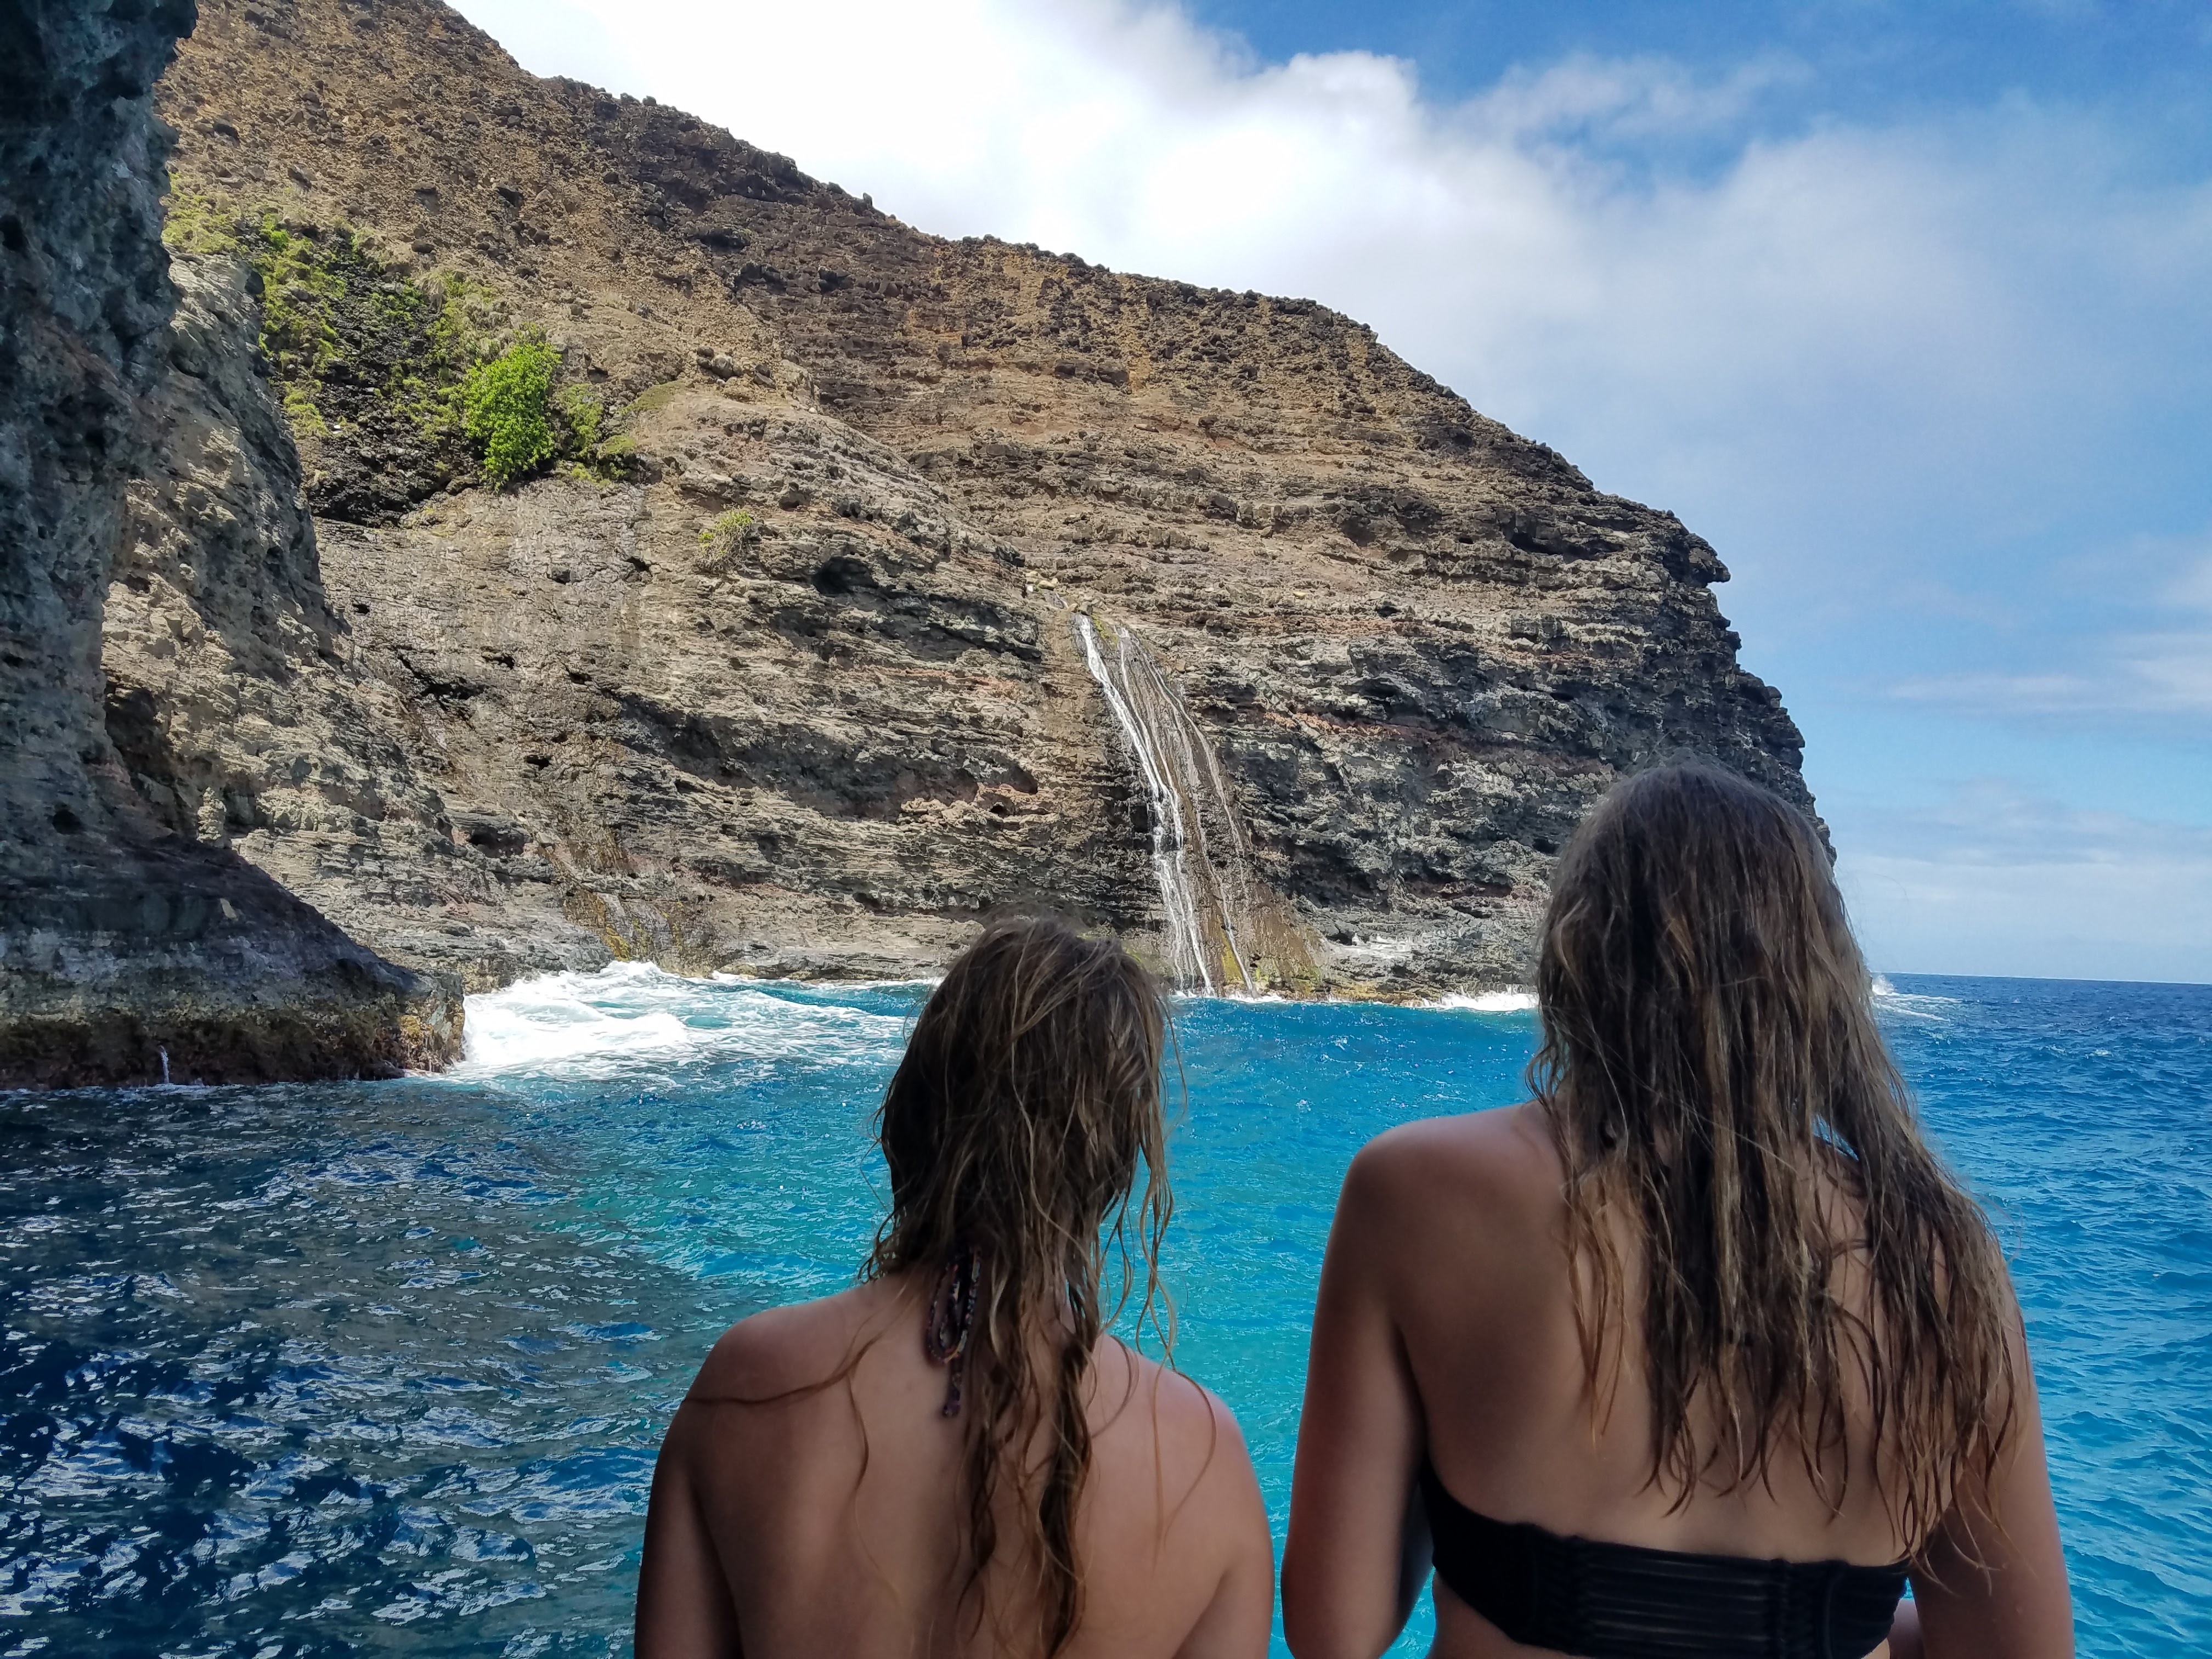 Why You Should See The Pali Coast Kauai by Boat